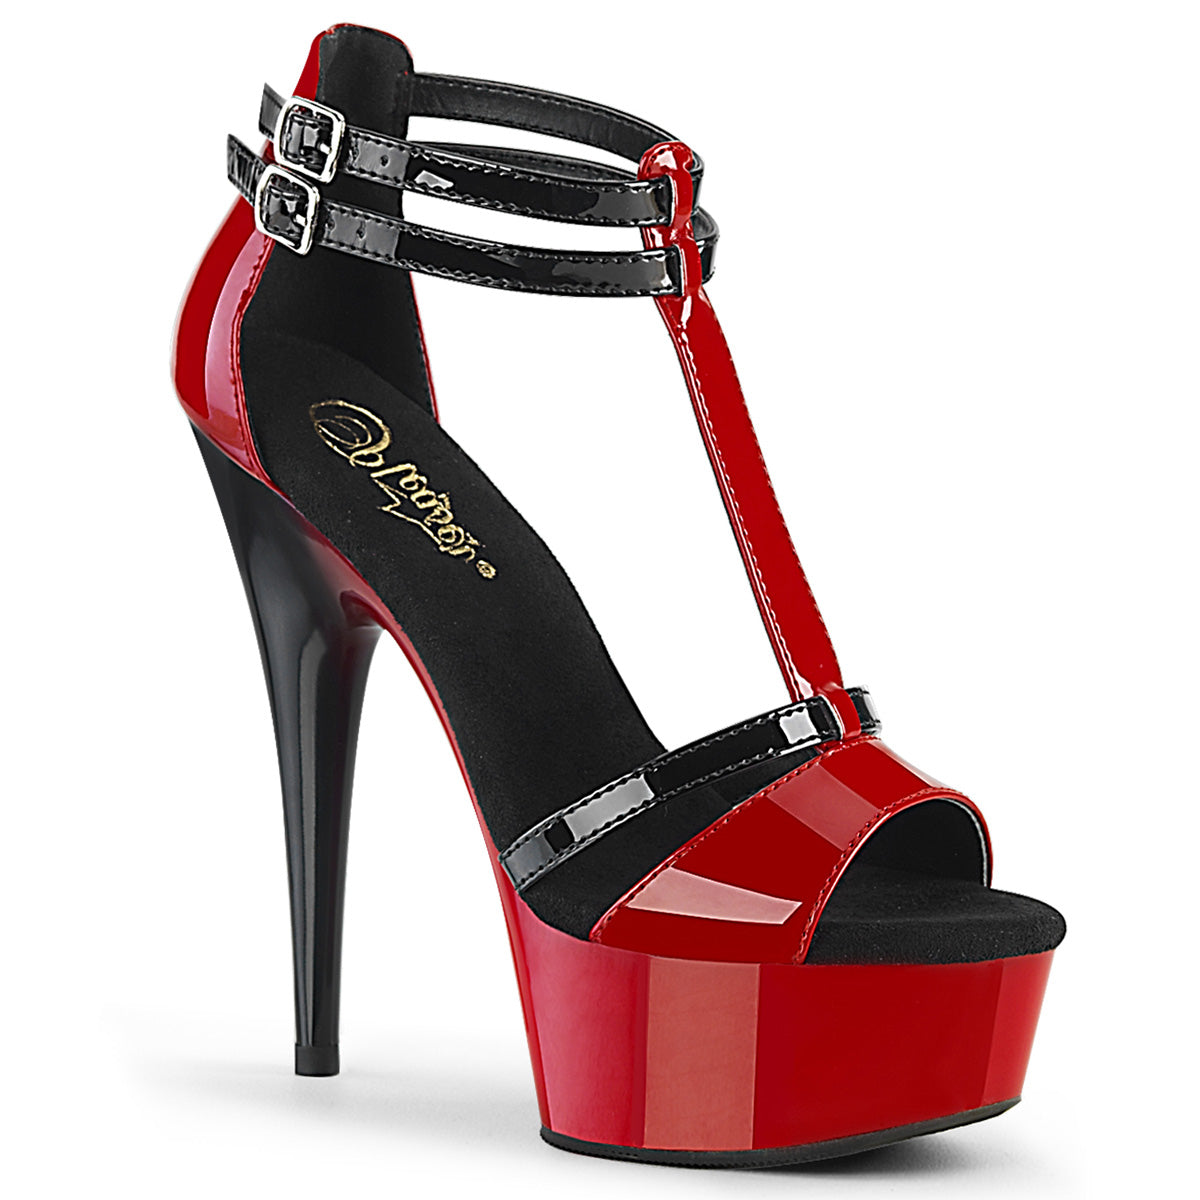 DELIGHT-663 Black & Red Ankle T-Strap High Heel